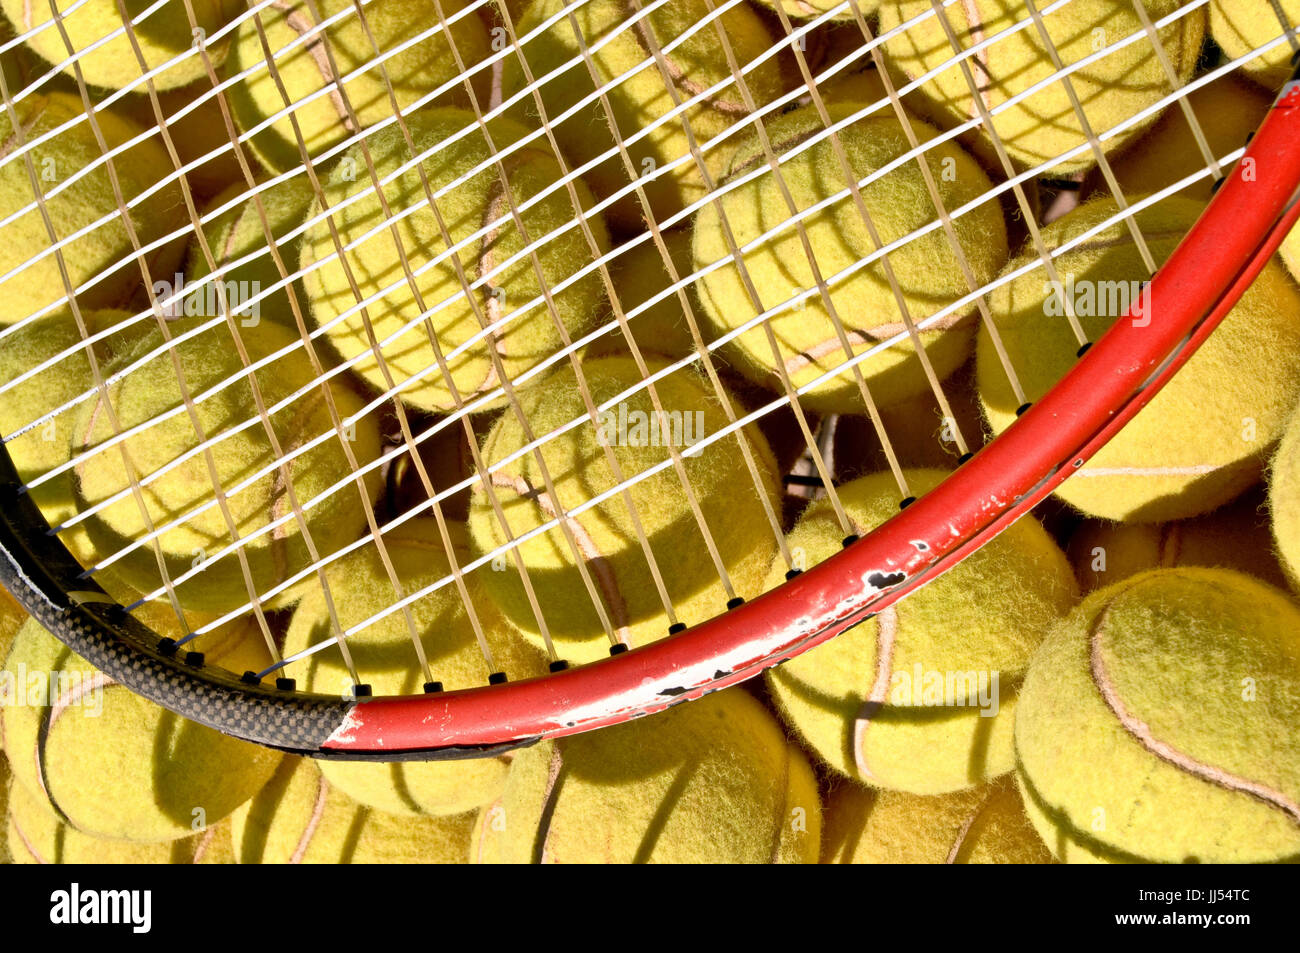 Tennis, Marbles, Racket, São Paulo, Brazil Stock Photo